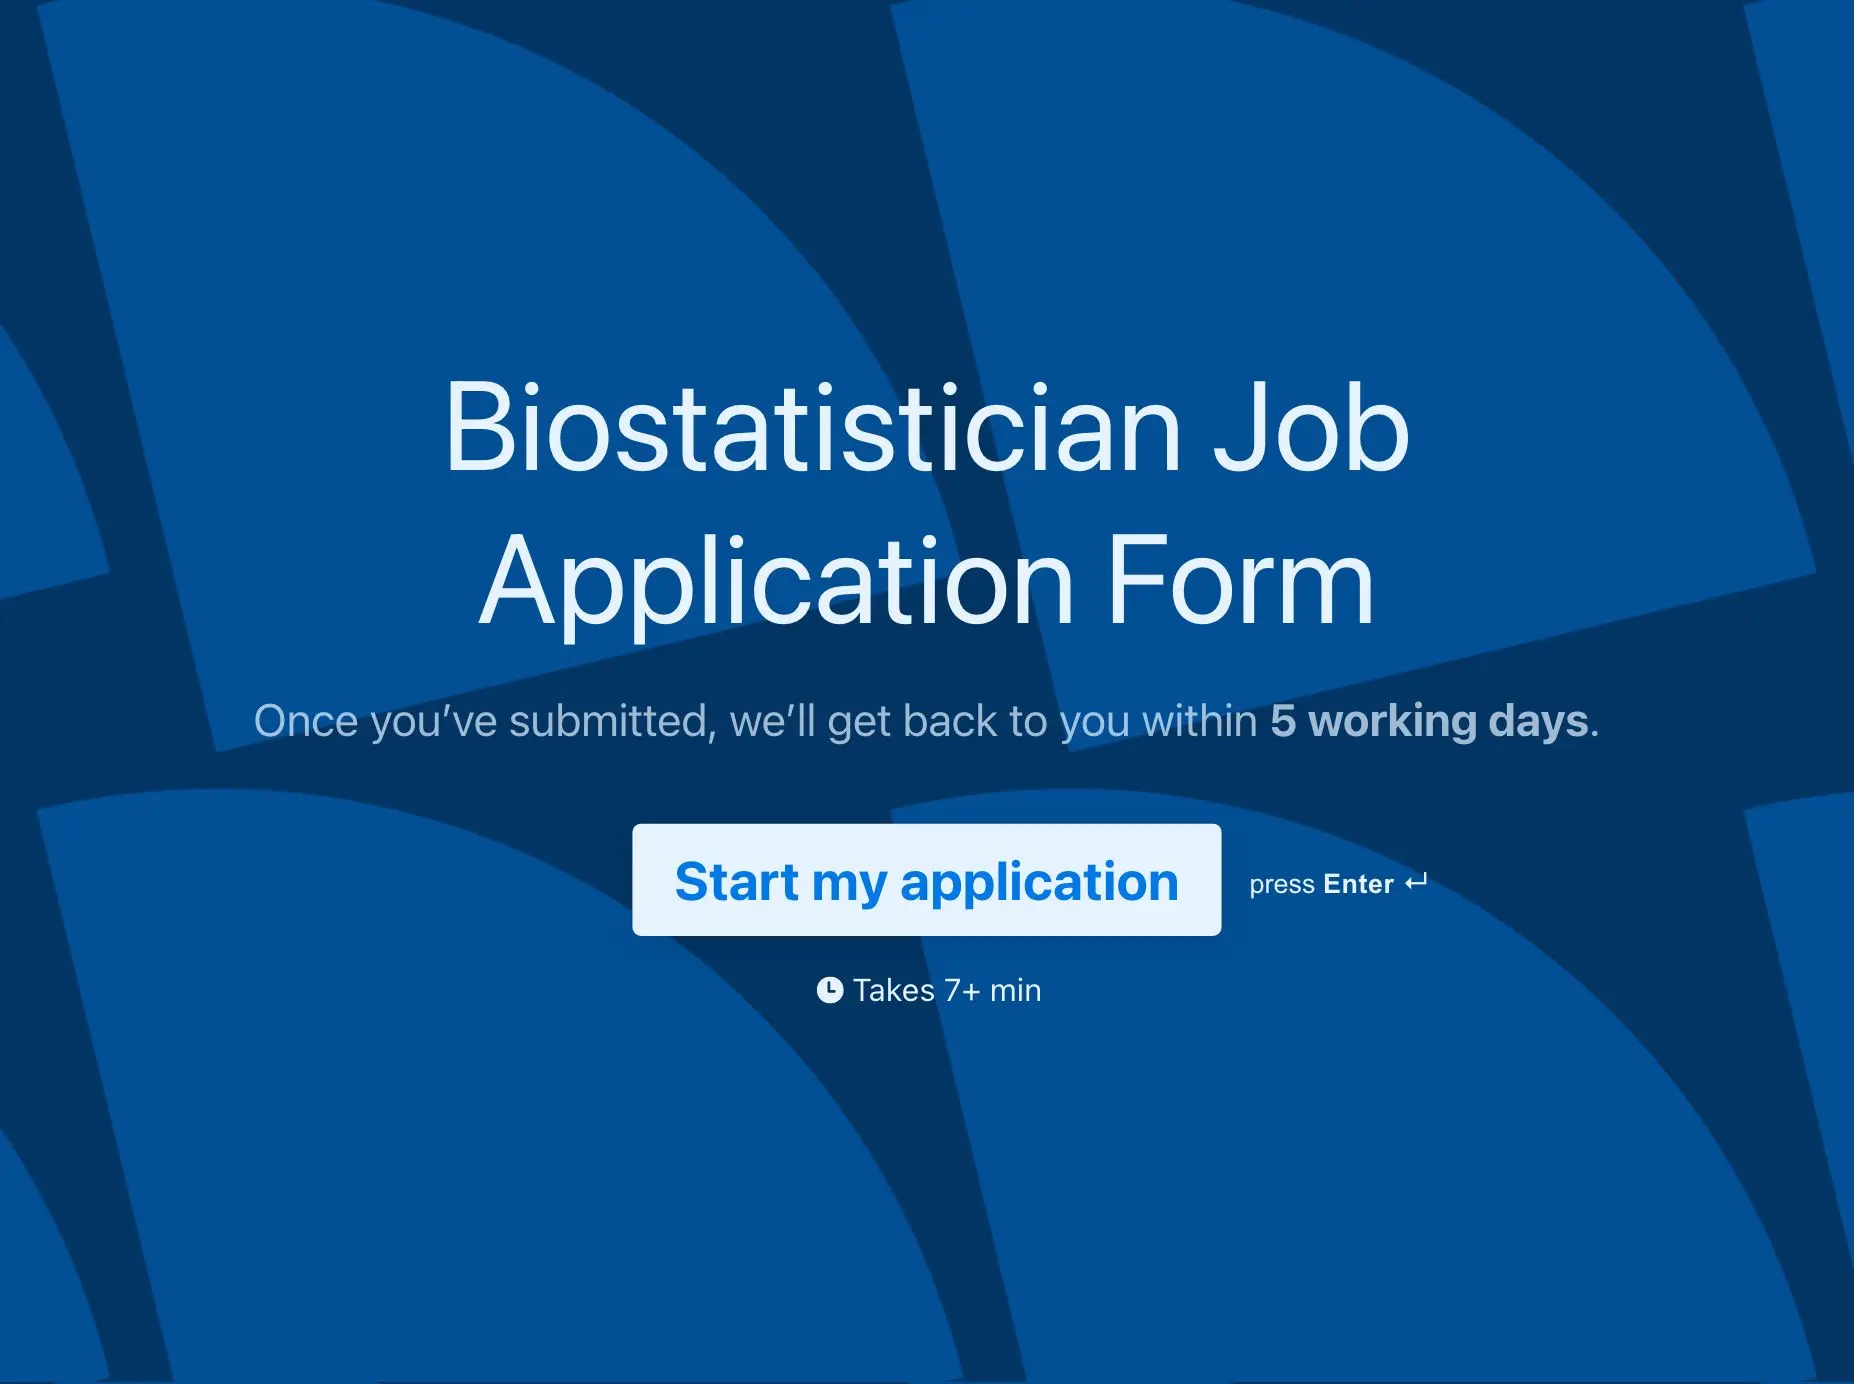 Biostatistician Job Application Form Template Hero